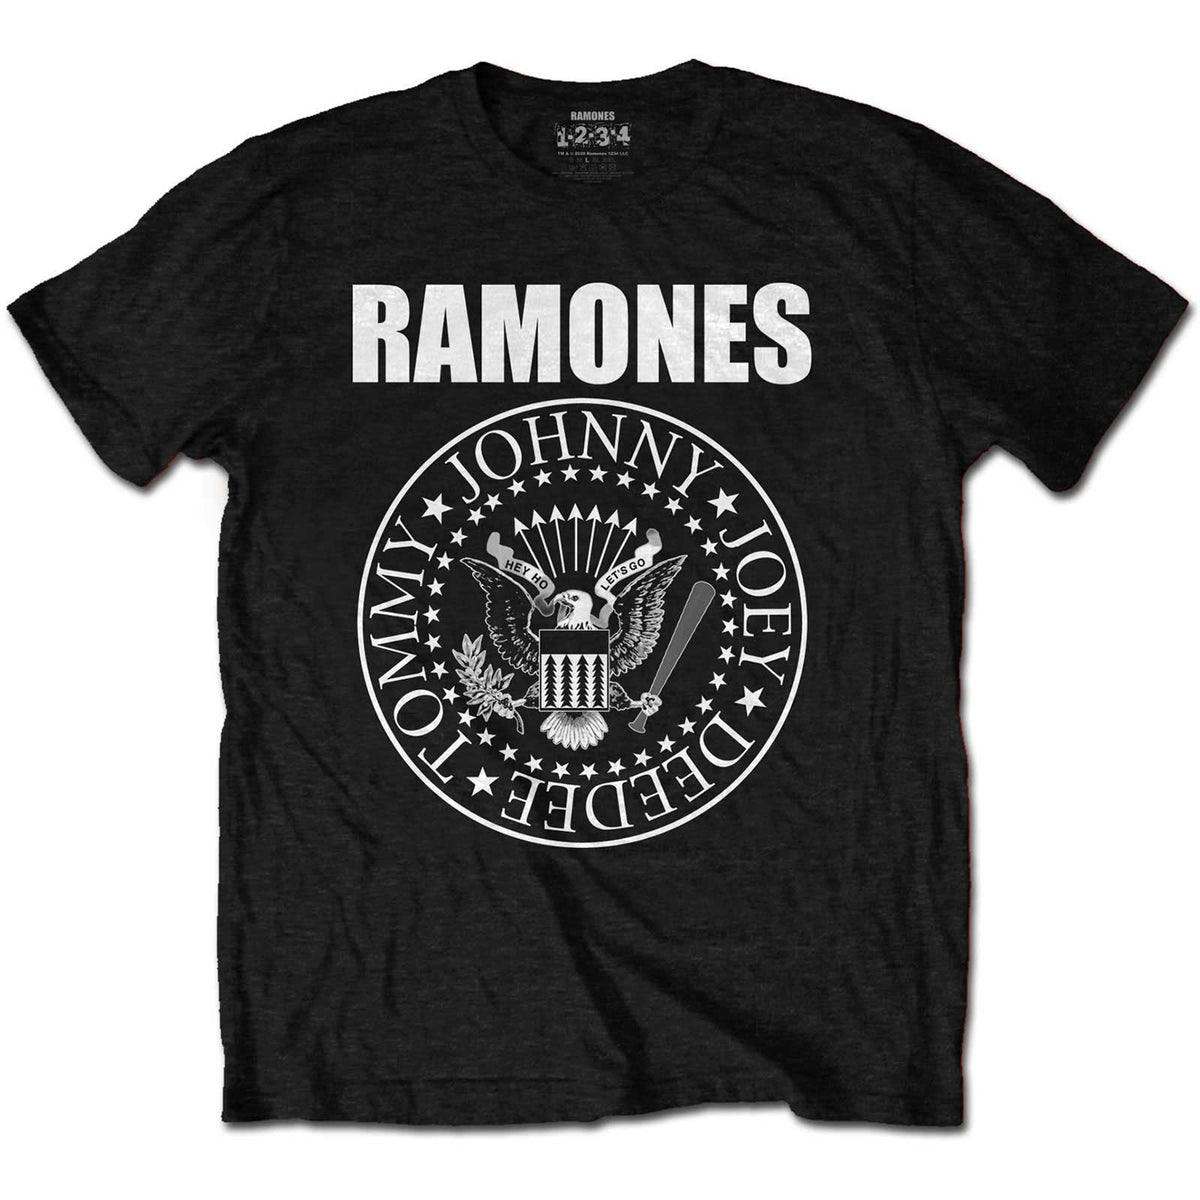 Ramones Kids T-Shirt - Presidential Seal - Black Kids Official Licensed Design